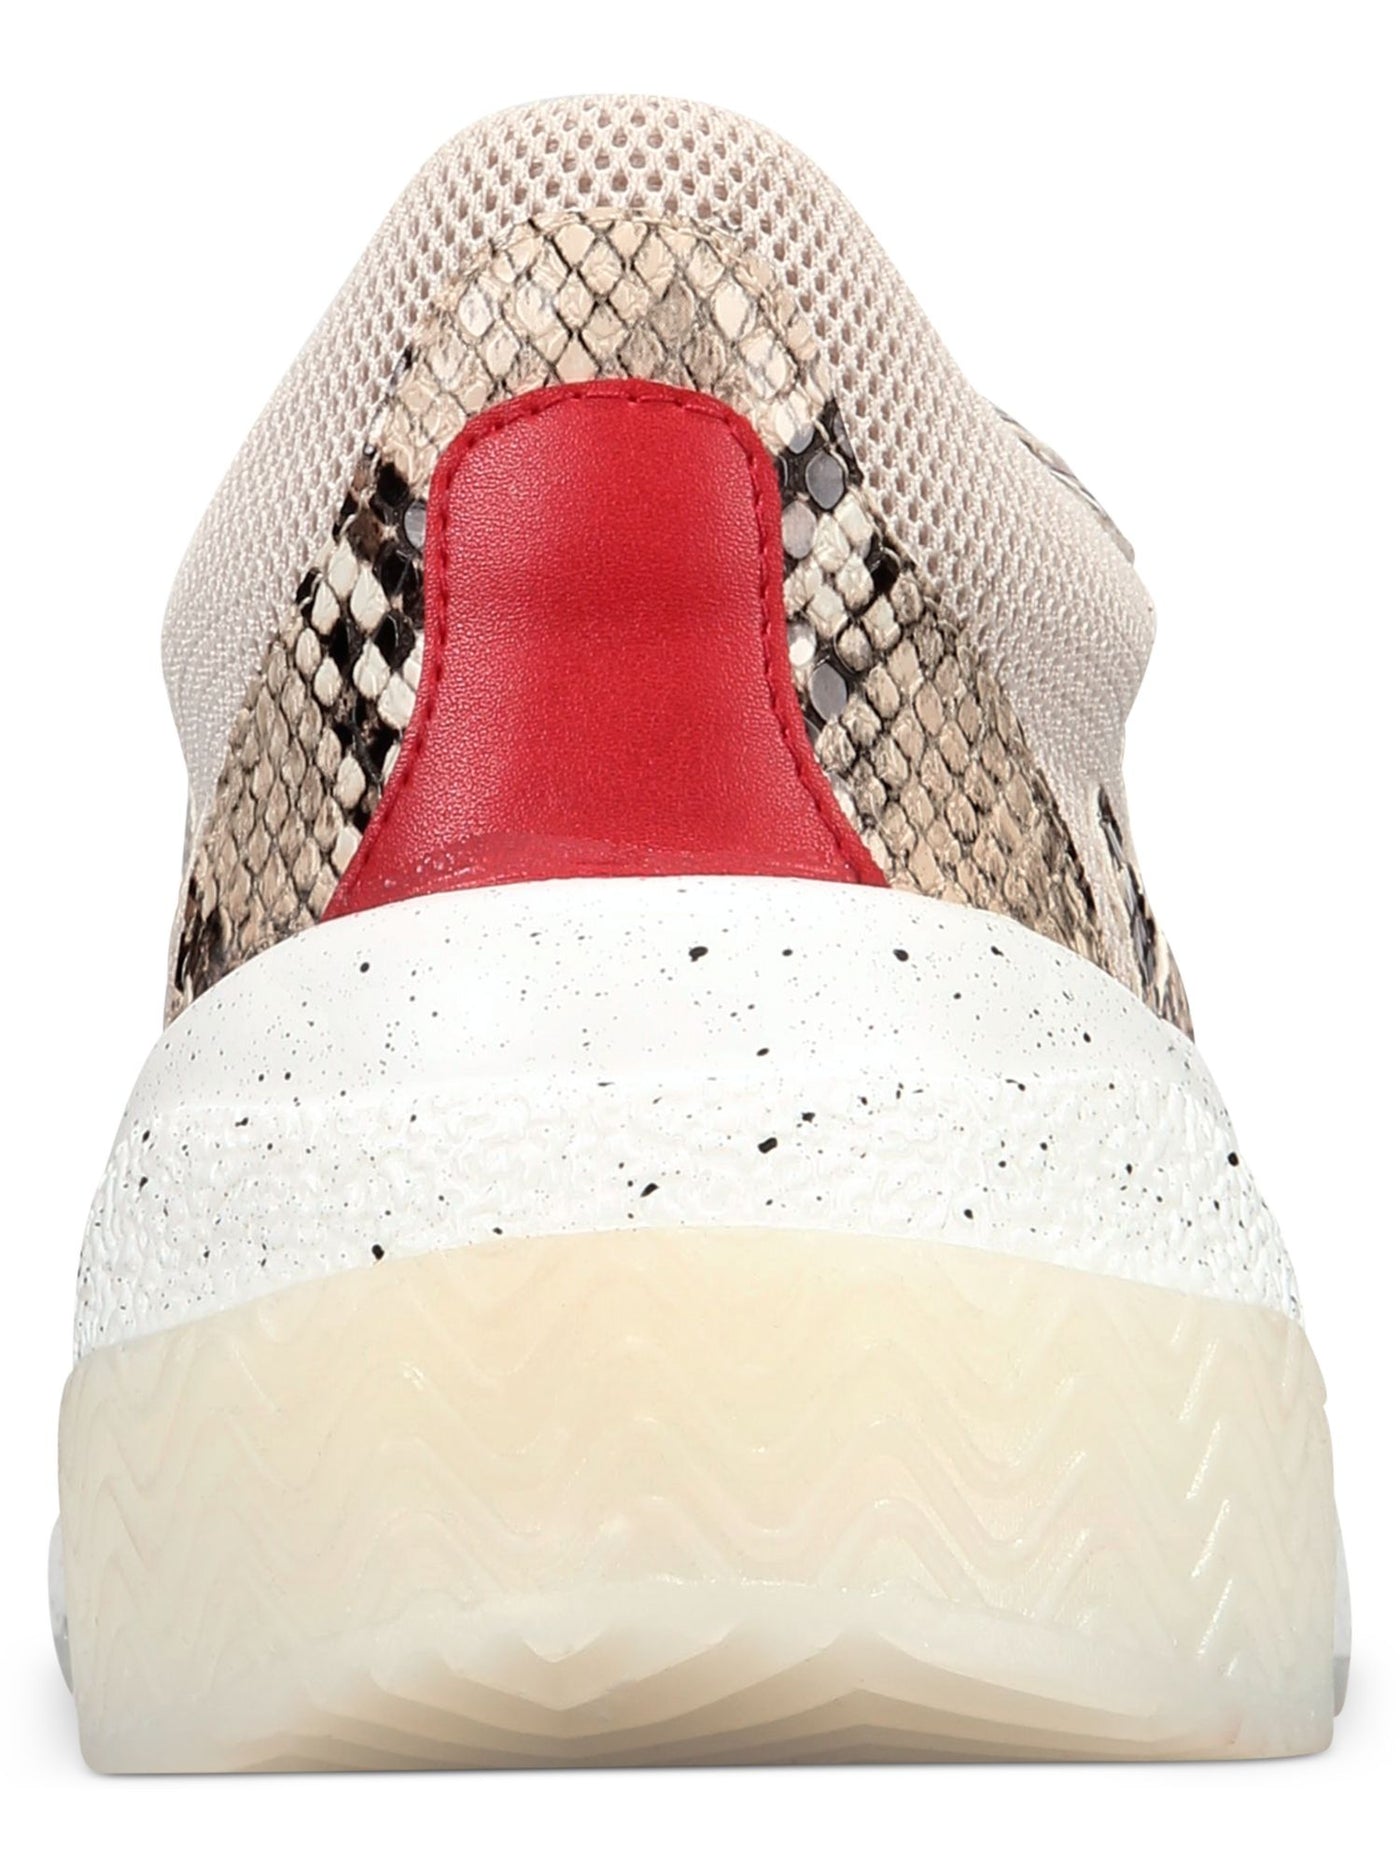 INC Womens White Snake Print Comfort Bubblez Round Toe Lace-Up Athletic Training Shoes 8.5 M